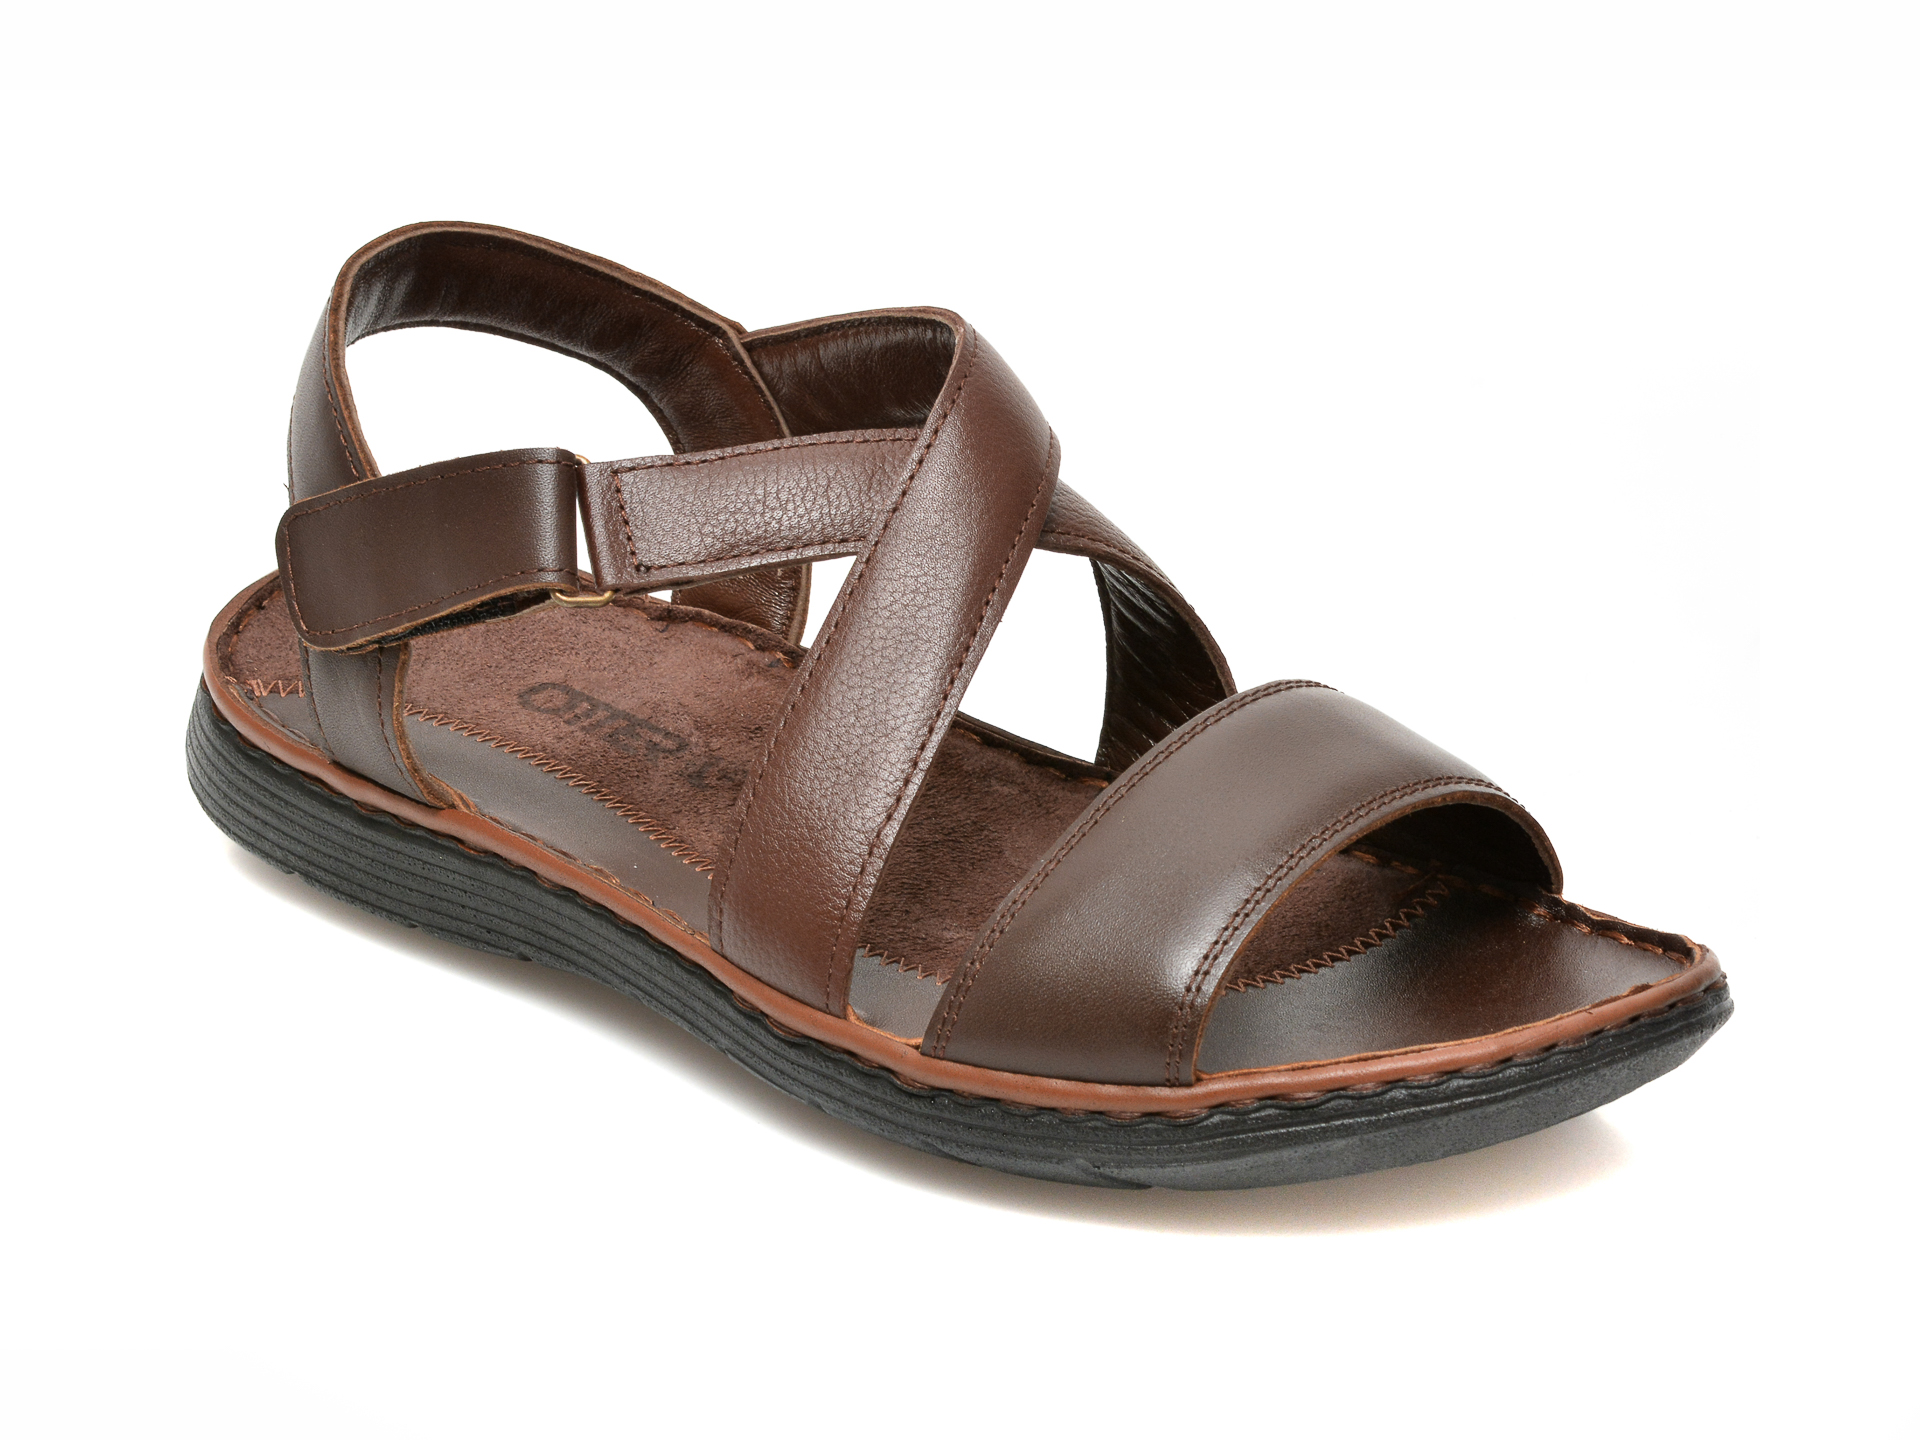 Sandale OTTER maro, 14204, din piele naturala /barbati/sandale